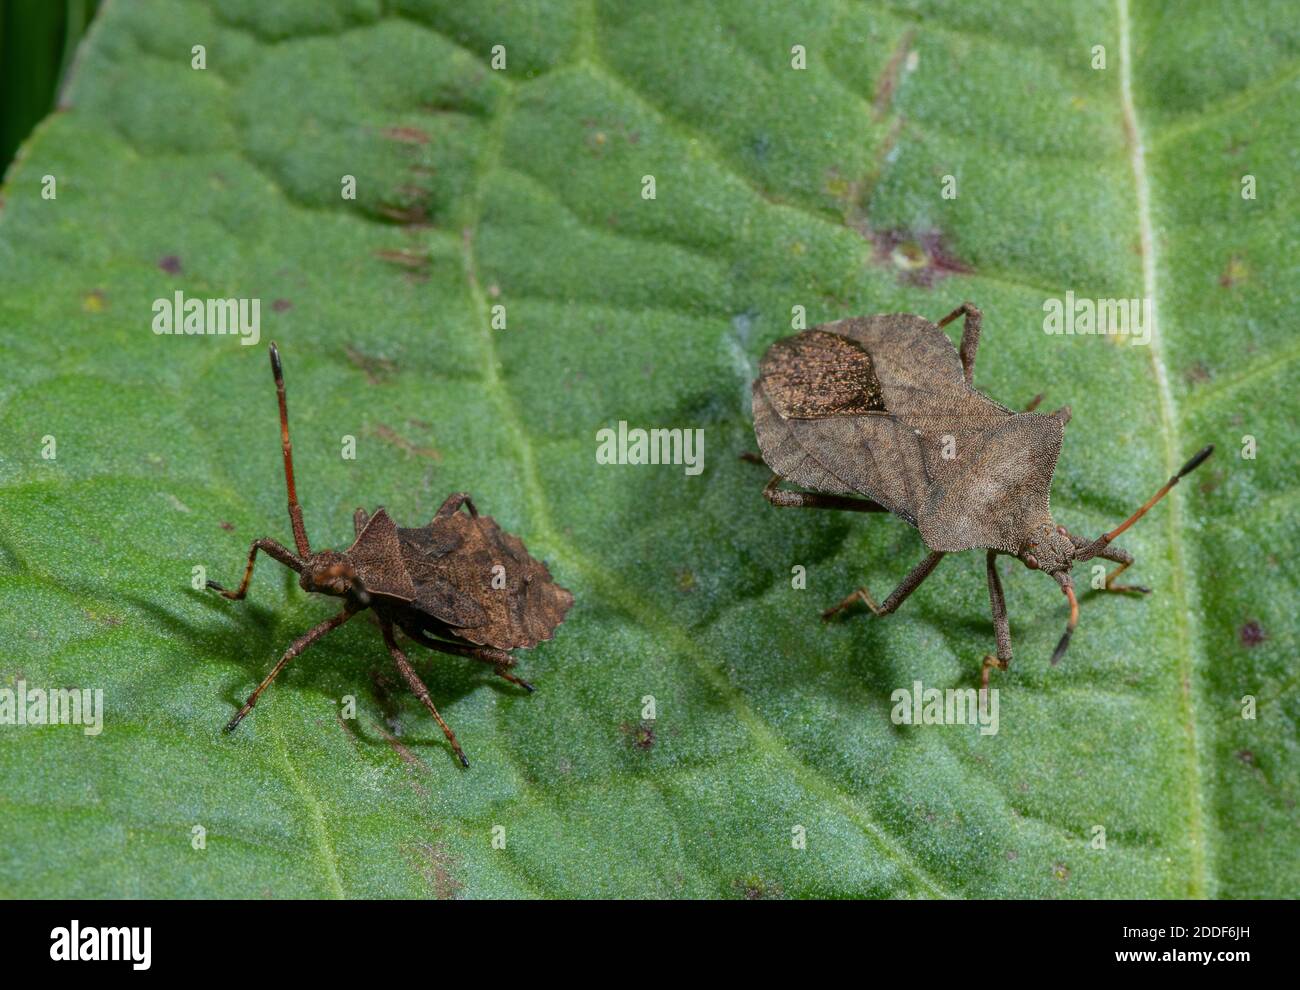 Dock bug, Coreus marginatus, - adult and nymph - on dock leaf. Stock Photo